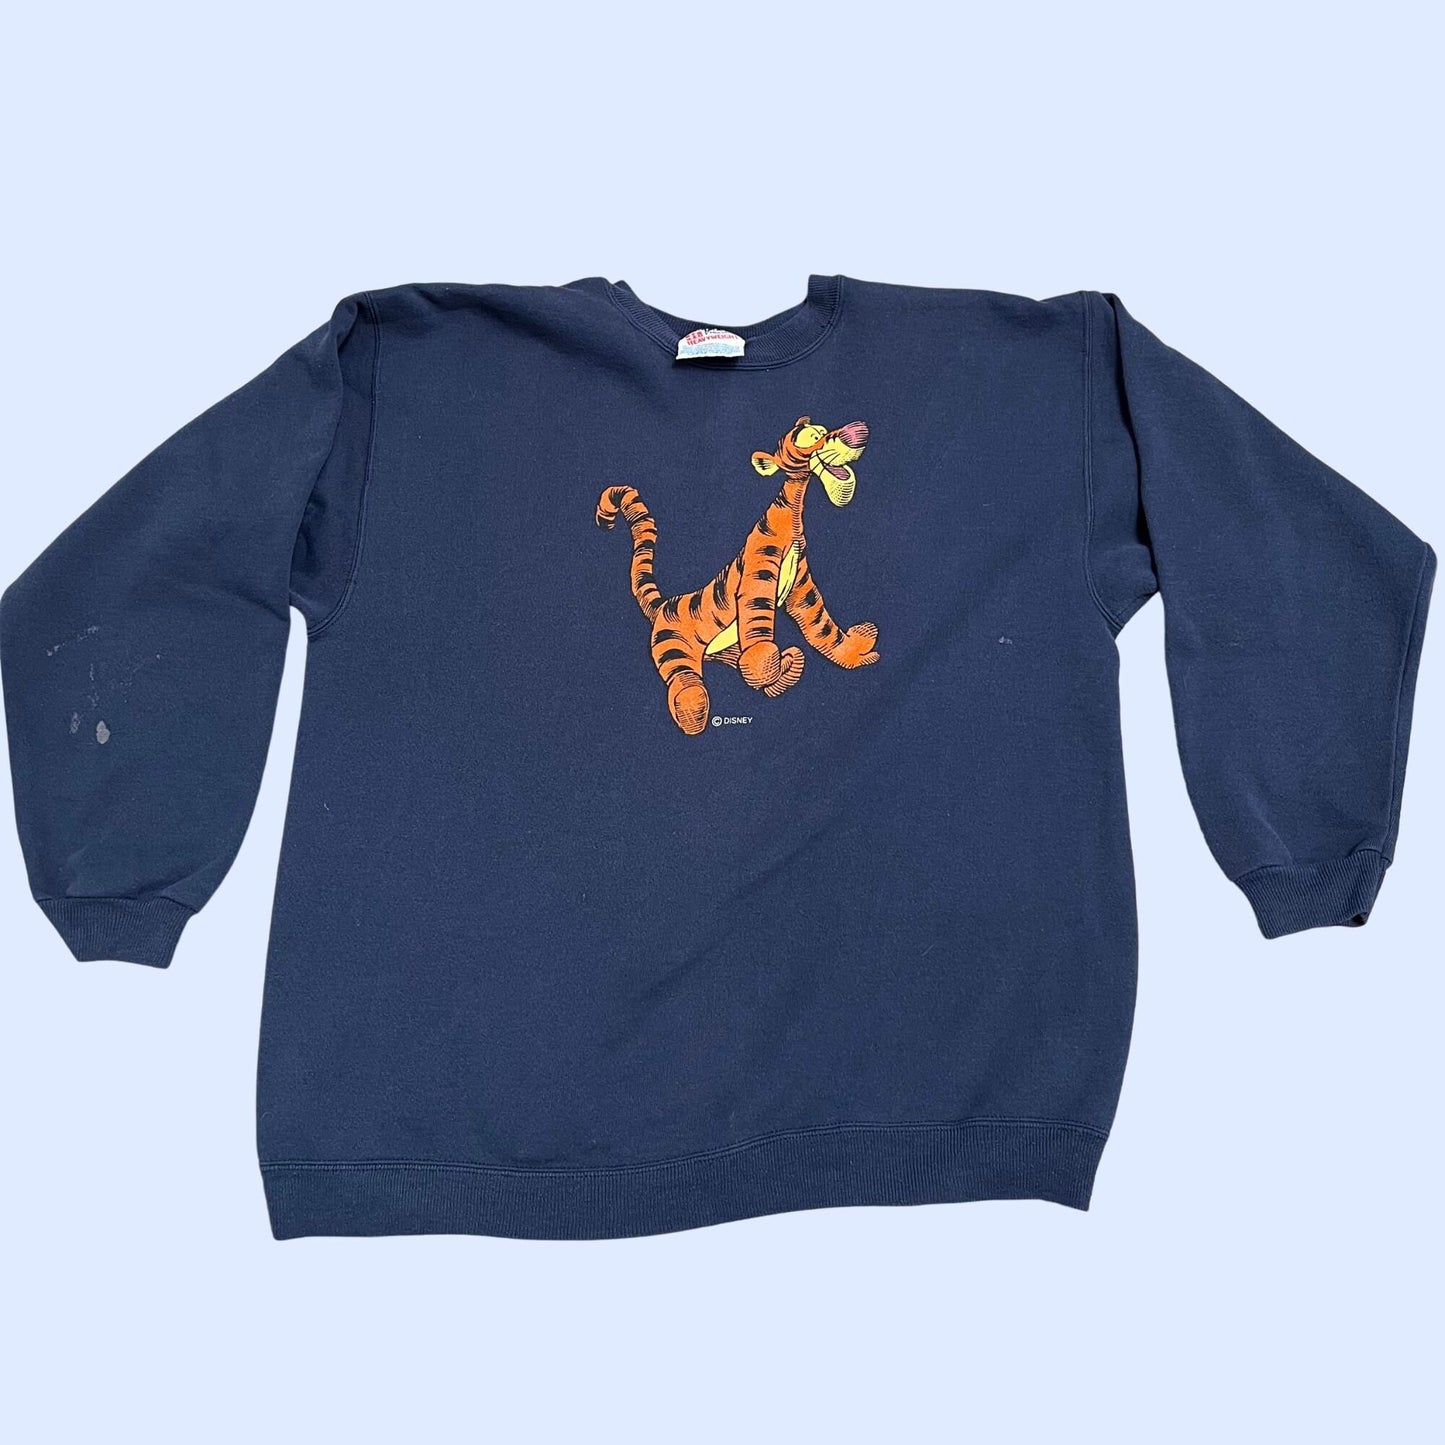 90s Tigger logo blue sweatshirt by Hanes, large 50/50 vintage crewneck sweatshirt, large blue tigger sweatshirt, Winnie the Poo sweatshirt